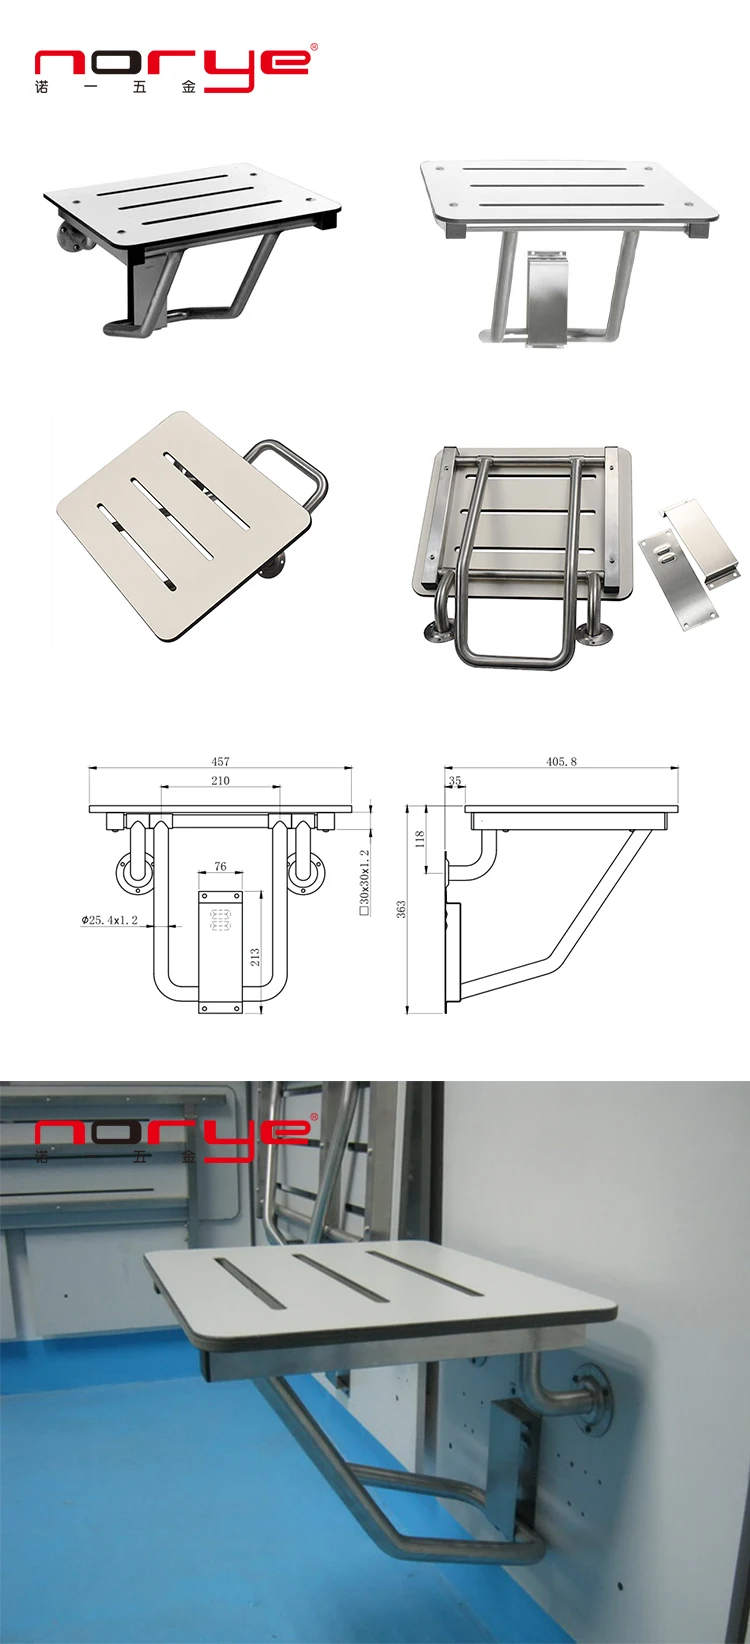 OEM Folding Wall Mounted bathroom Shower Seat Stainless Steel 304 Bracket